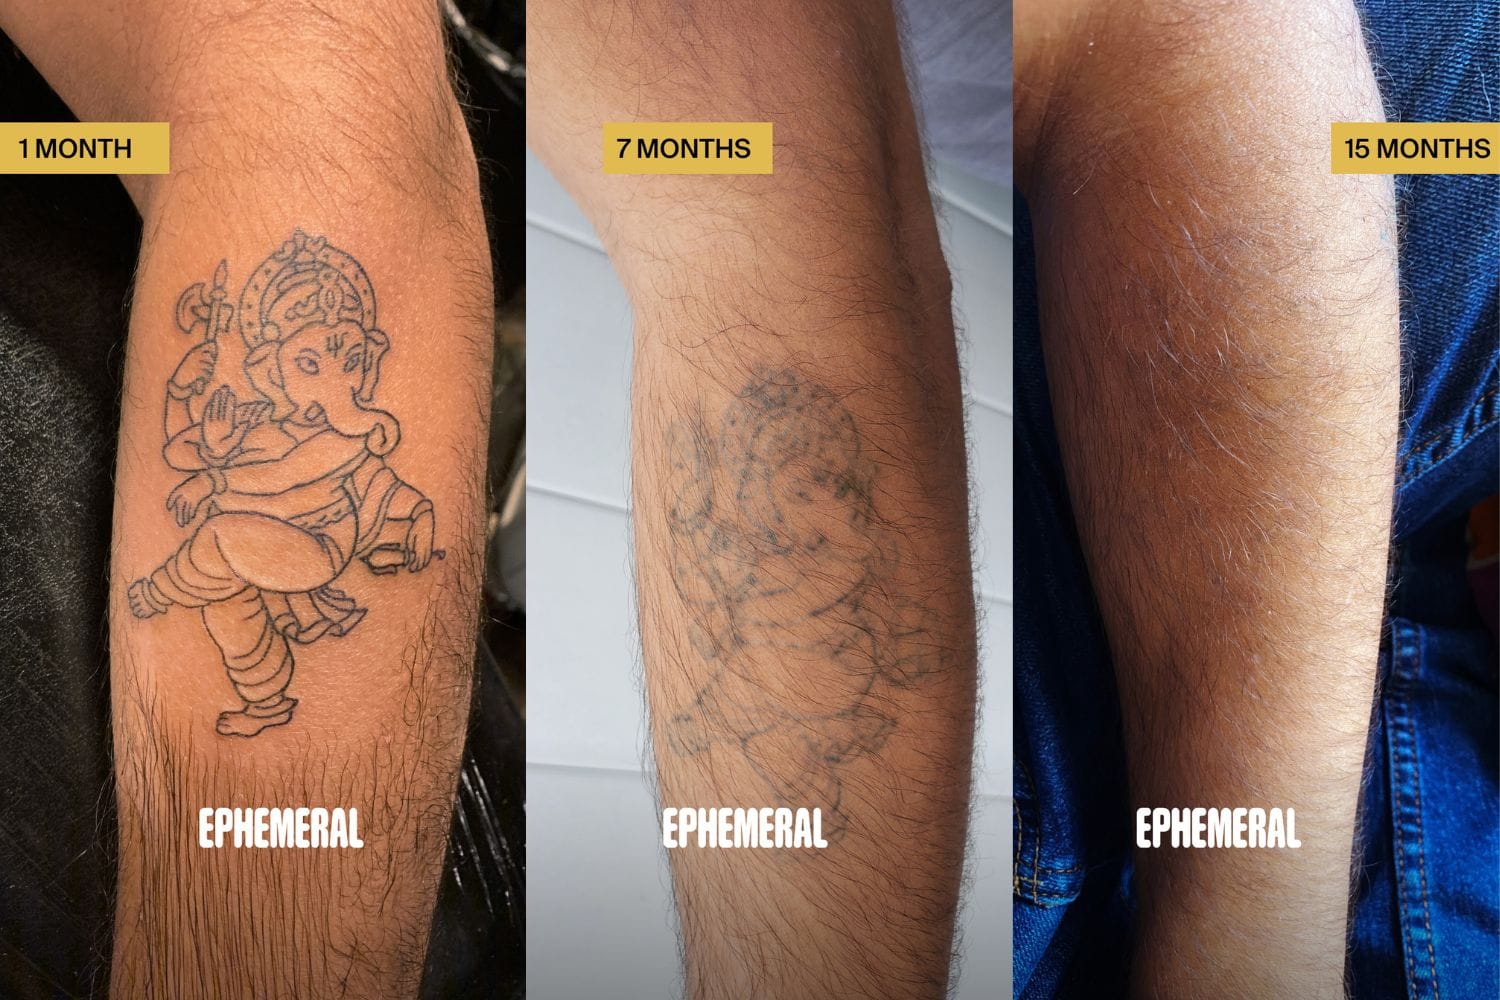 do ephemeral tattoos fade